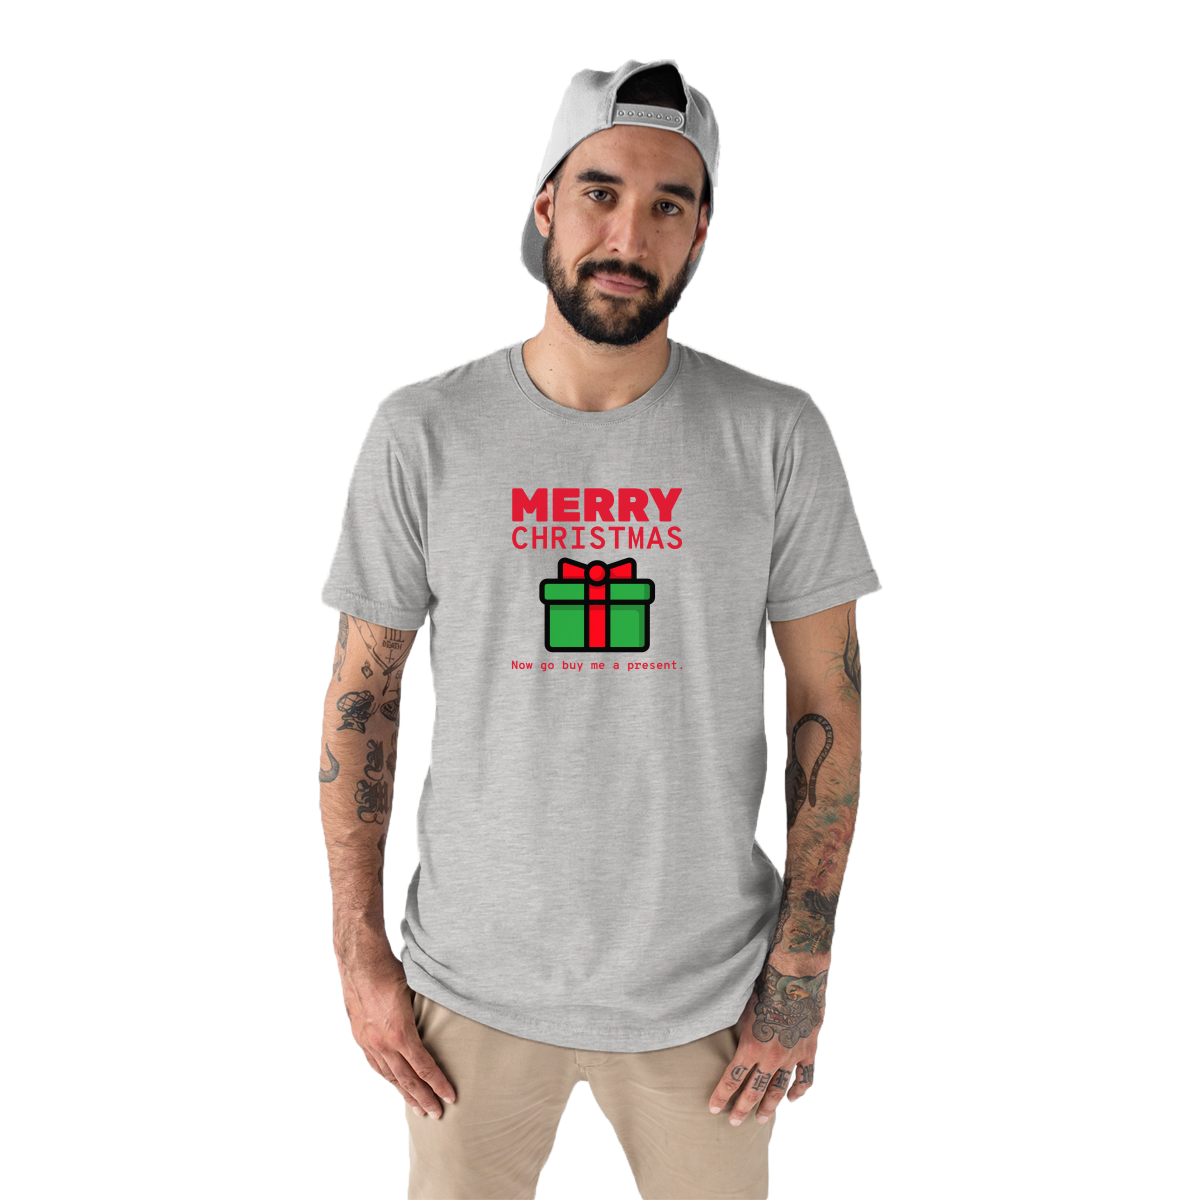 Merry Christmas Now Go Buy Me a Present Men's T-shirt | Gray